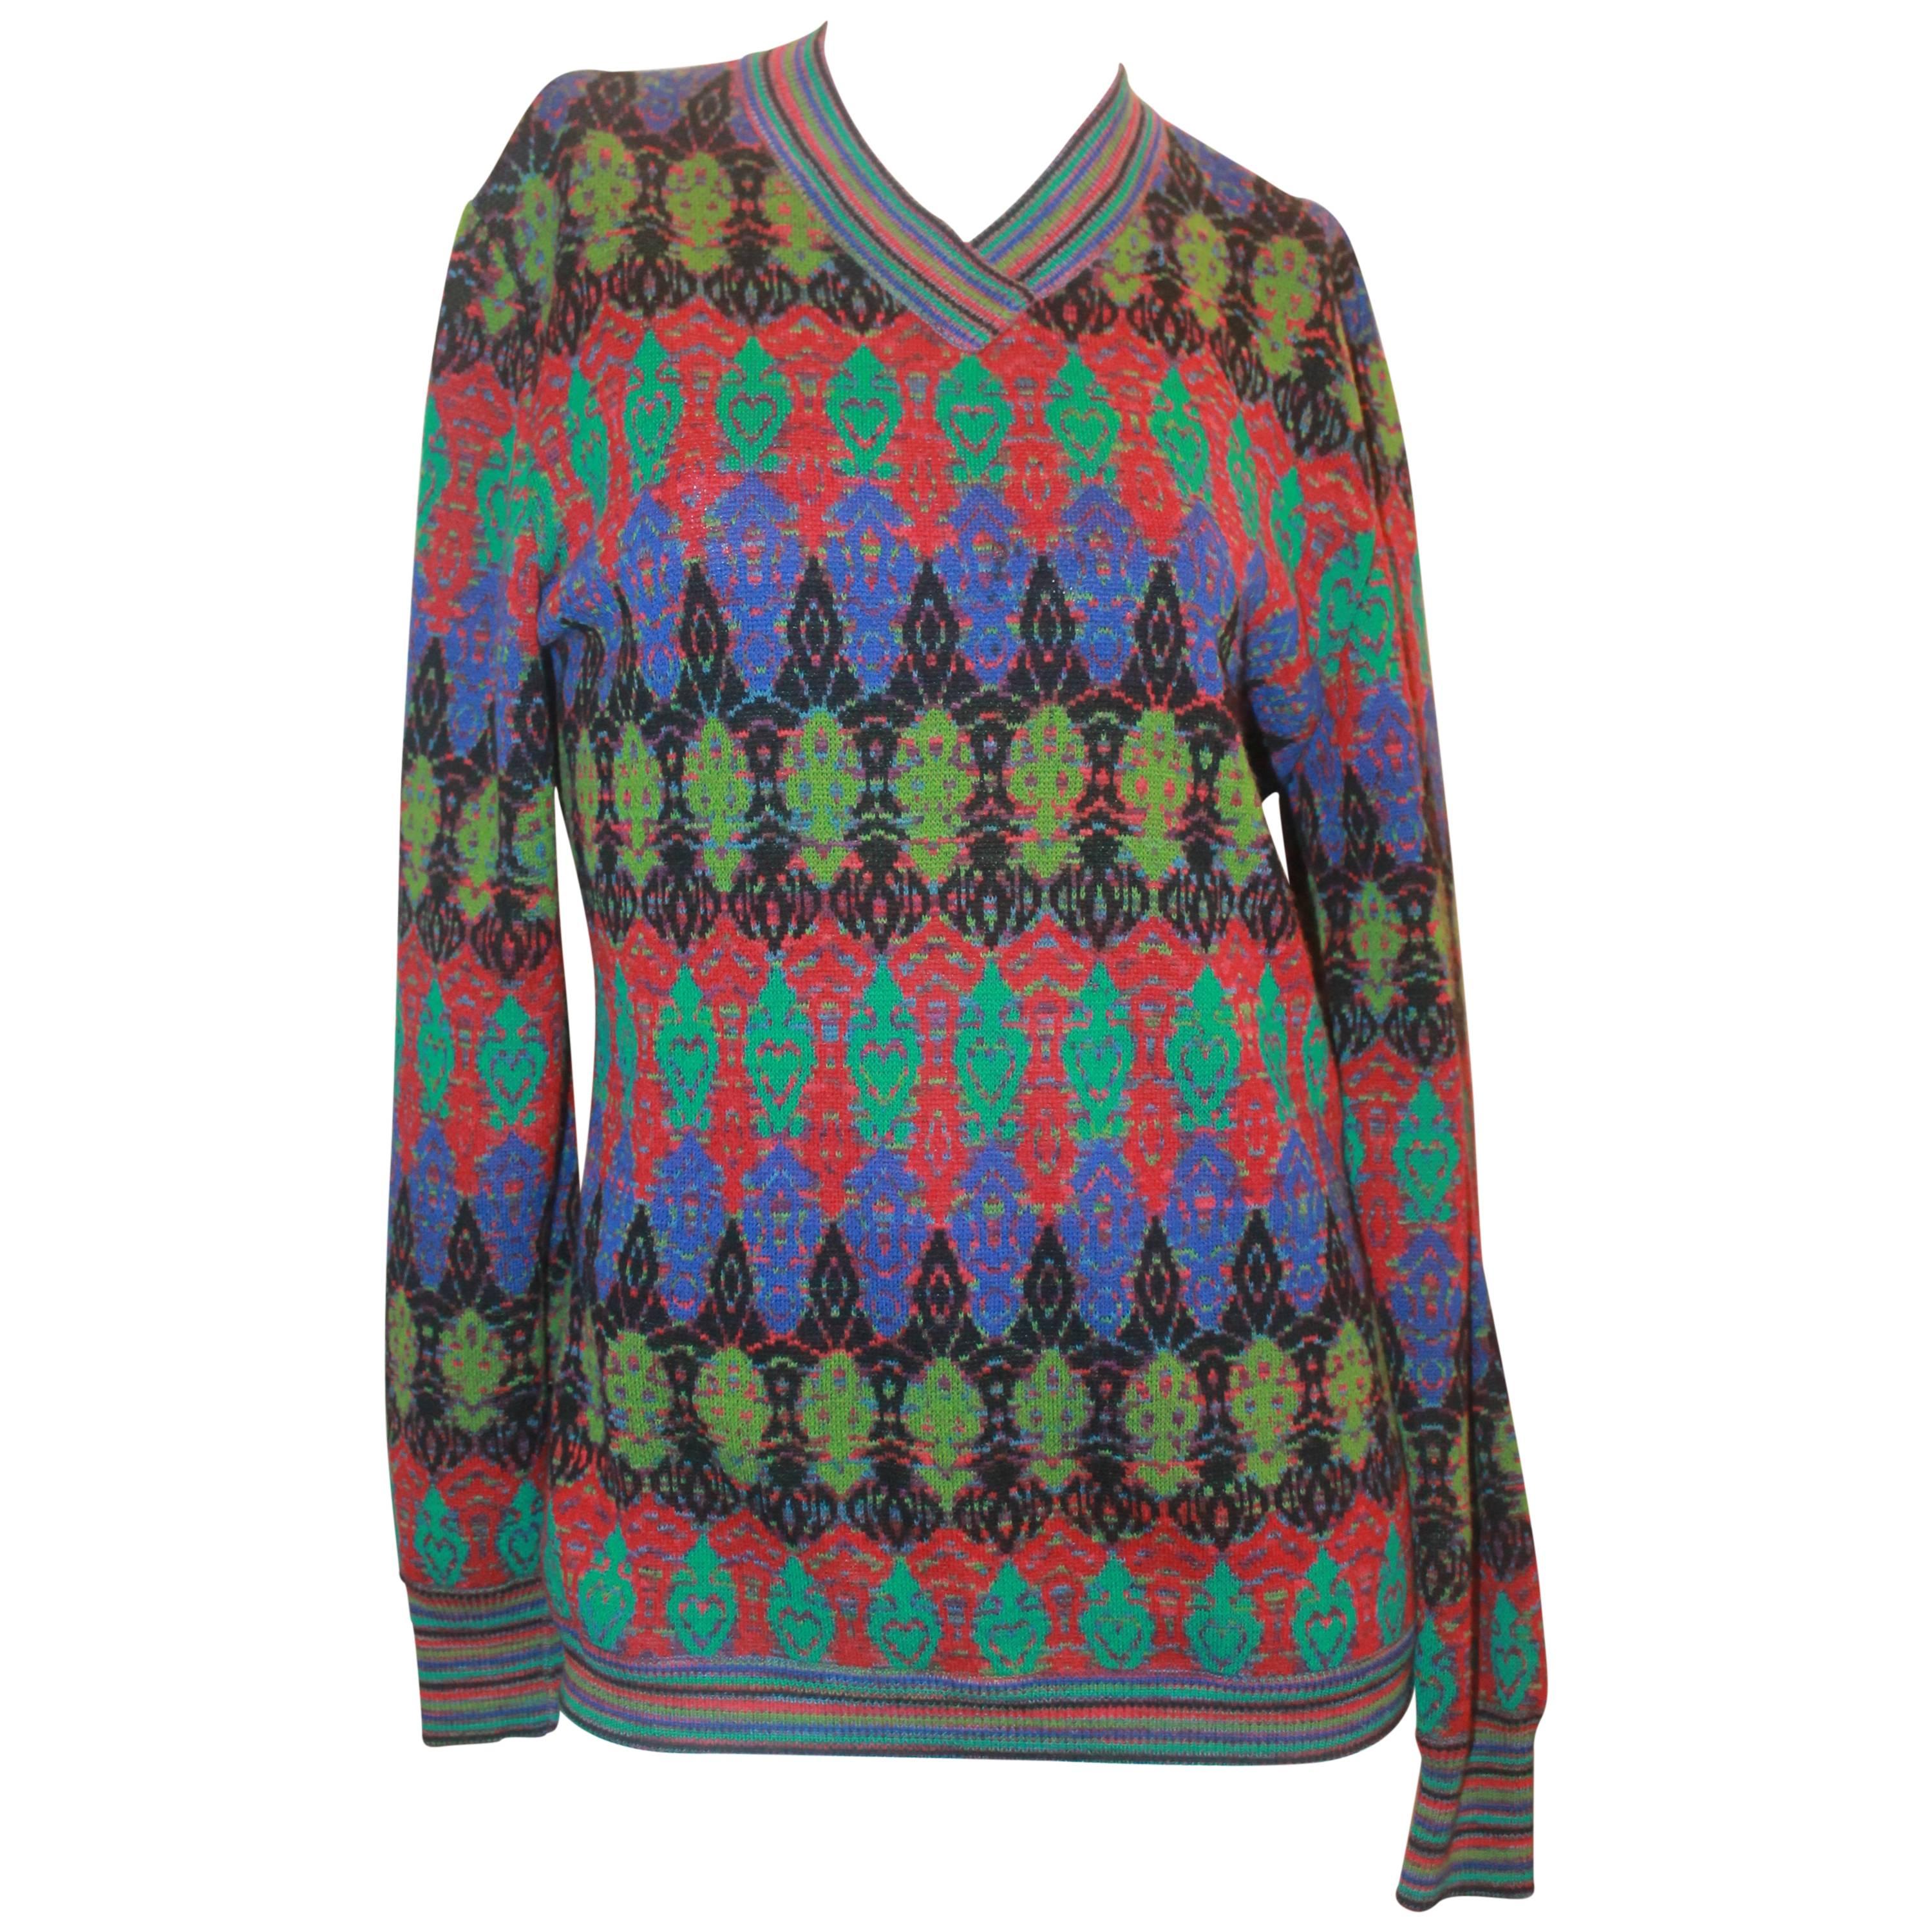 Missoni Vintage Multi Colored Knit Sweater w/ an Artsy Pattern - M -Circa 1970's